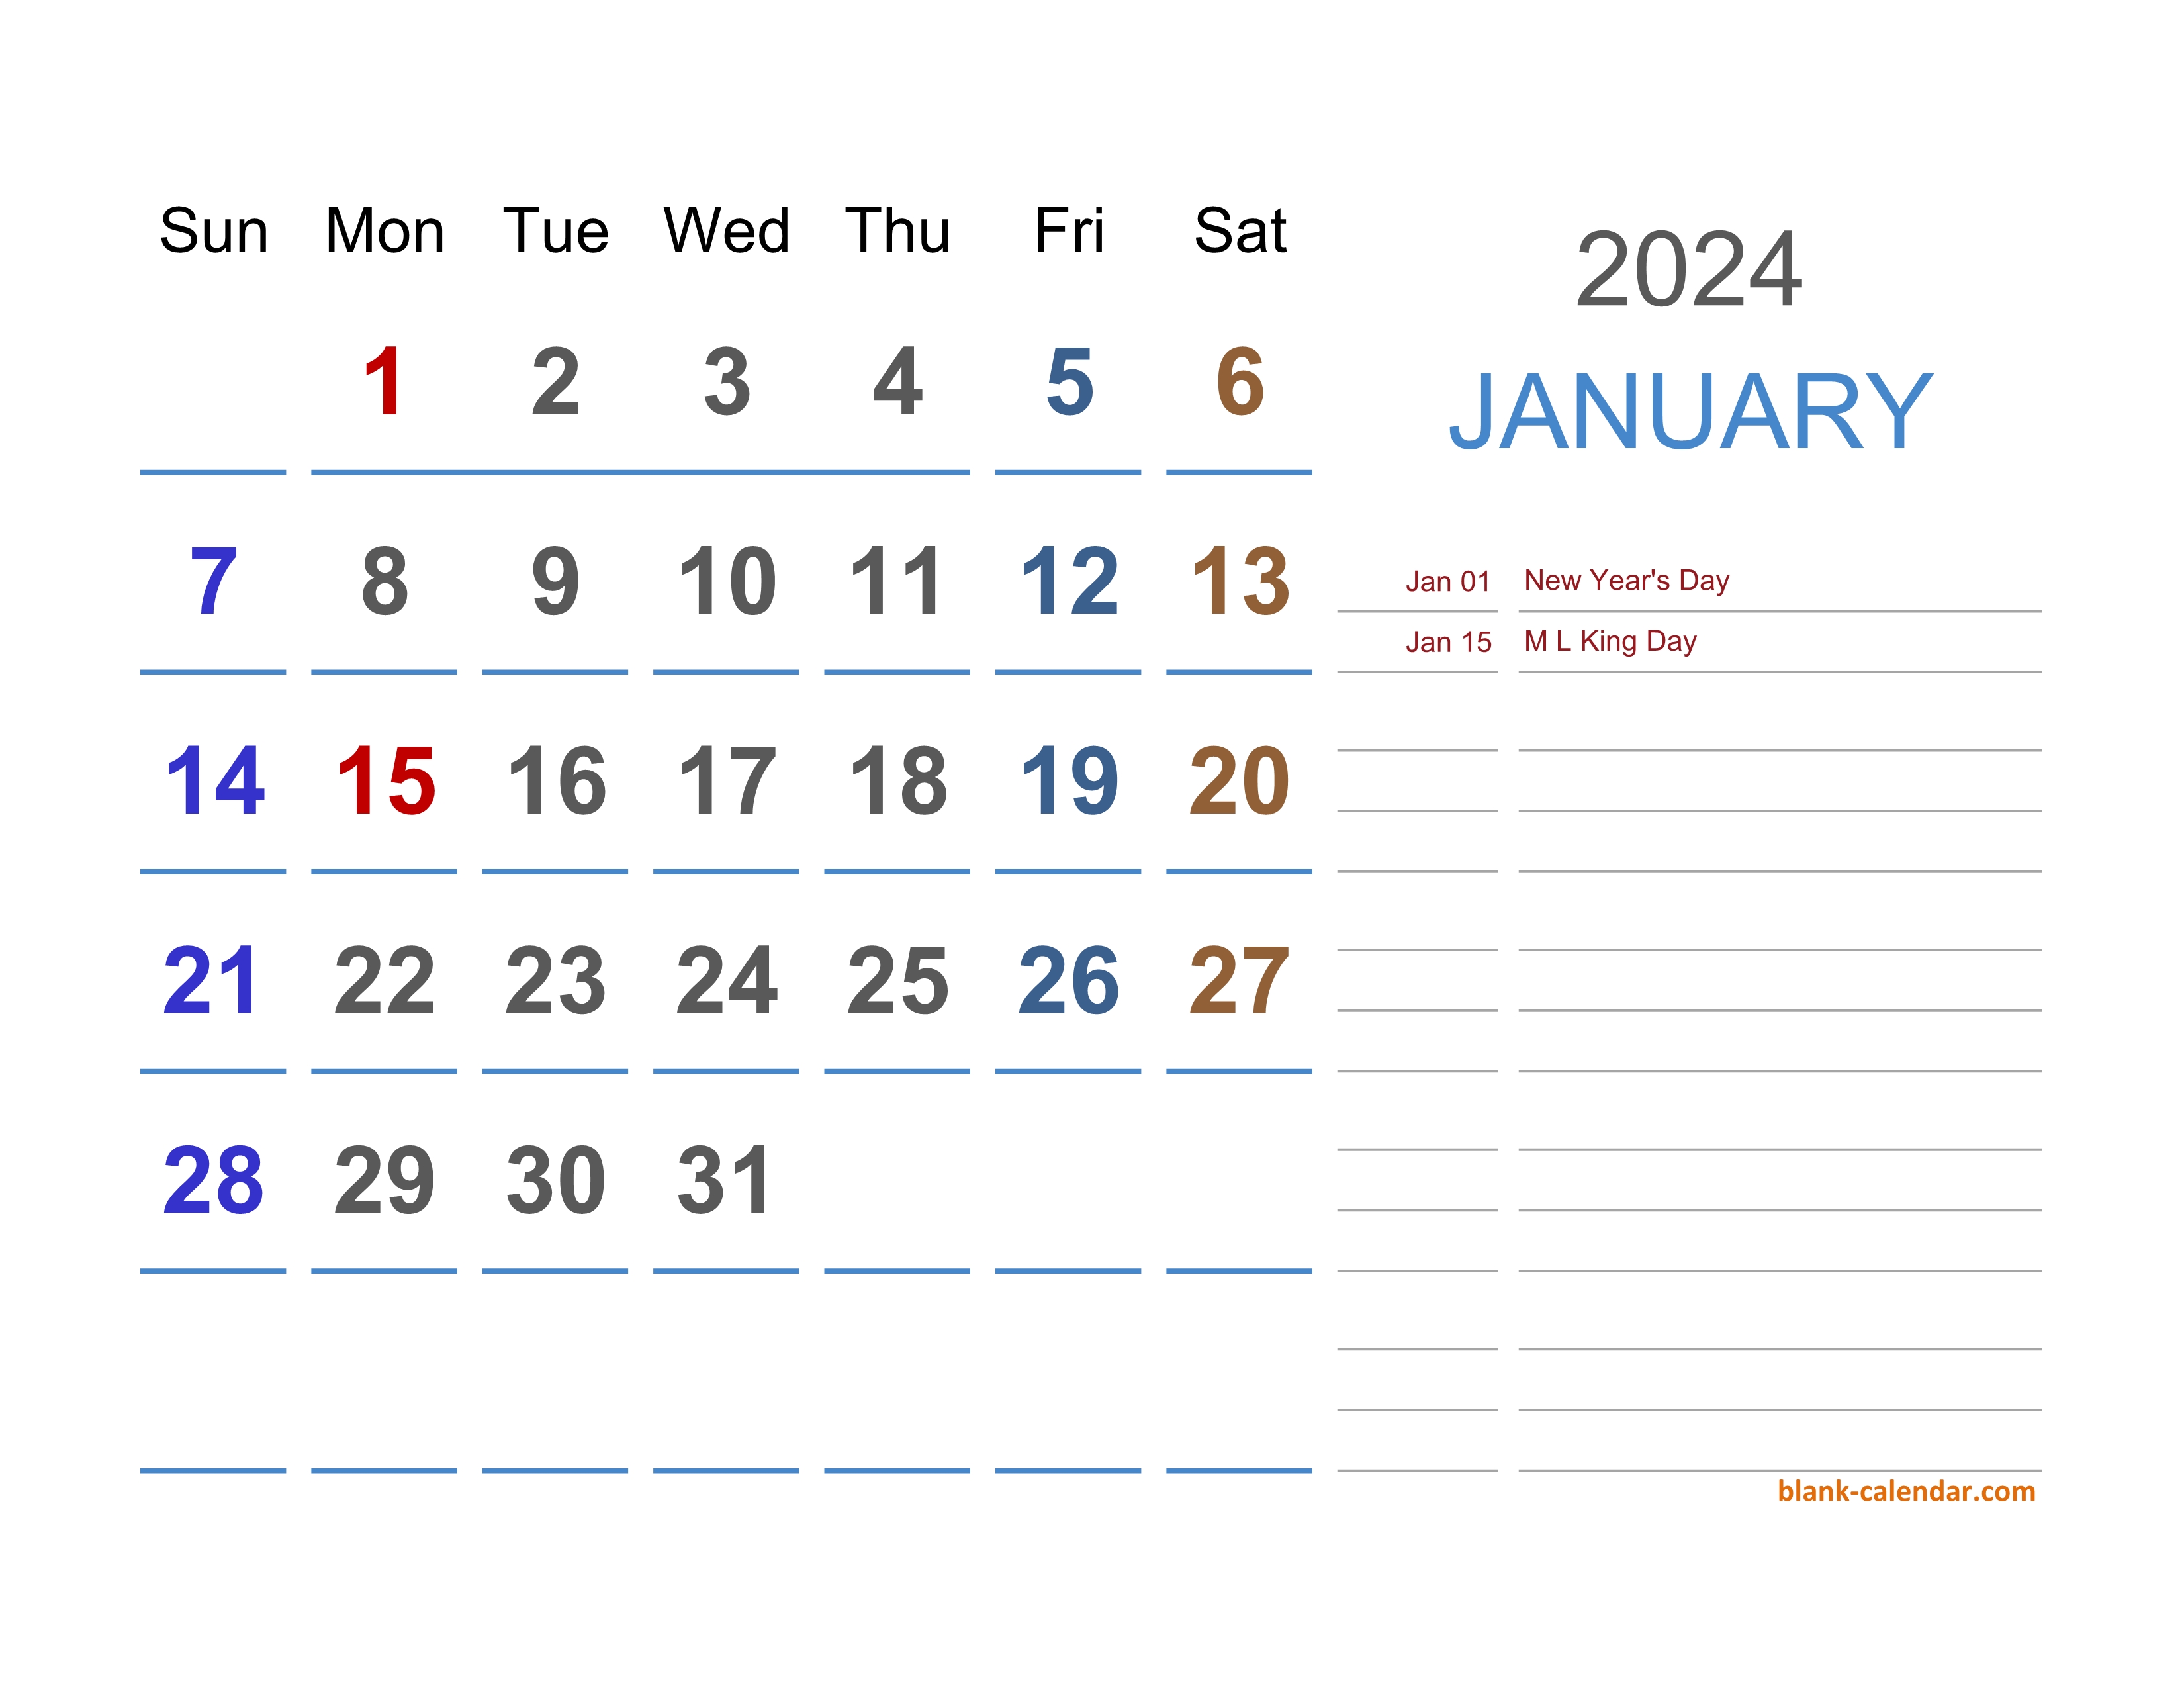 Еврейский календарь на 2024 год. Календарь на 2024 год. Календарь календарь 2024. Календарь 2024 эксель. Календарь март 2024.